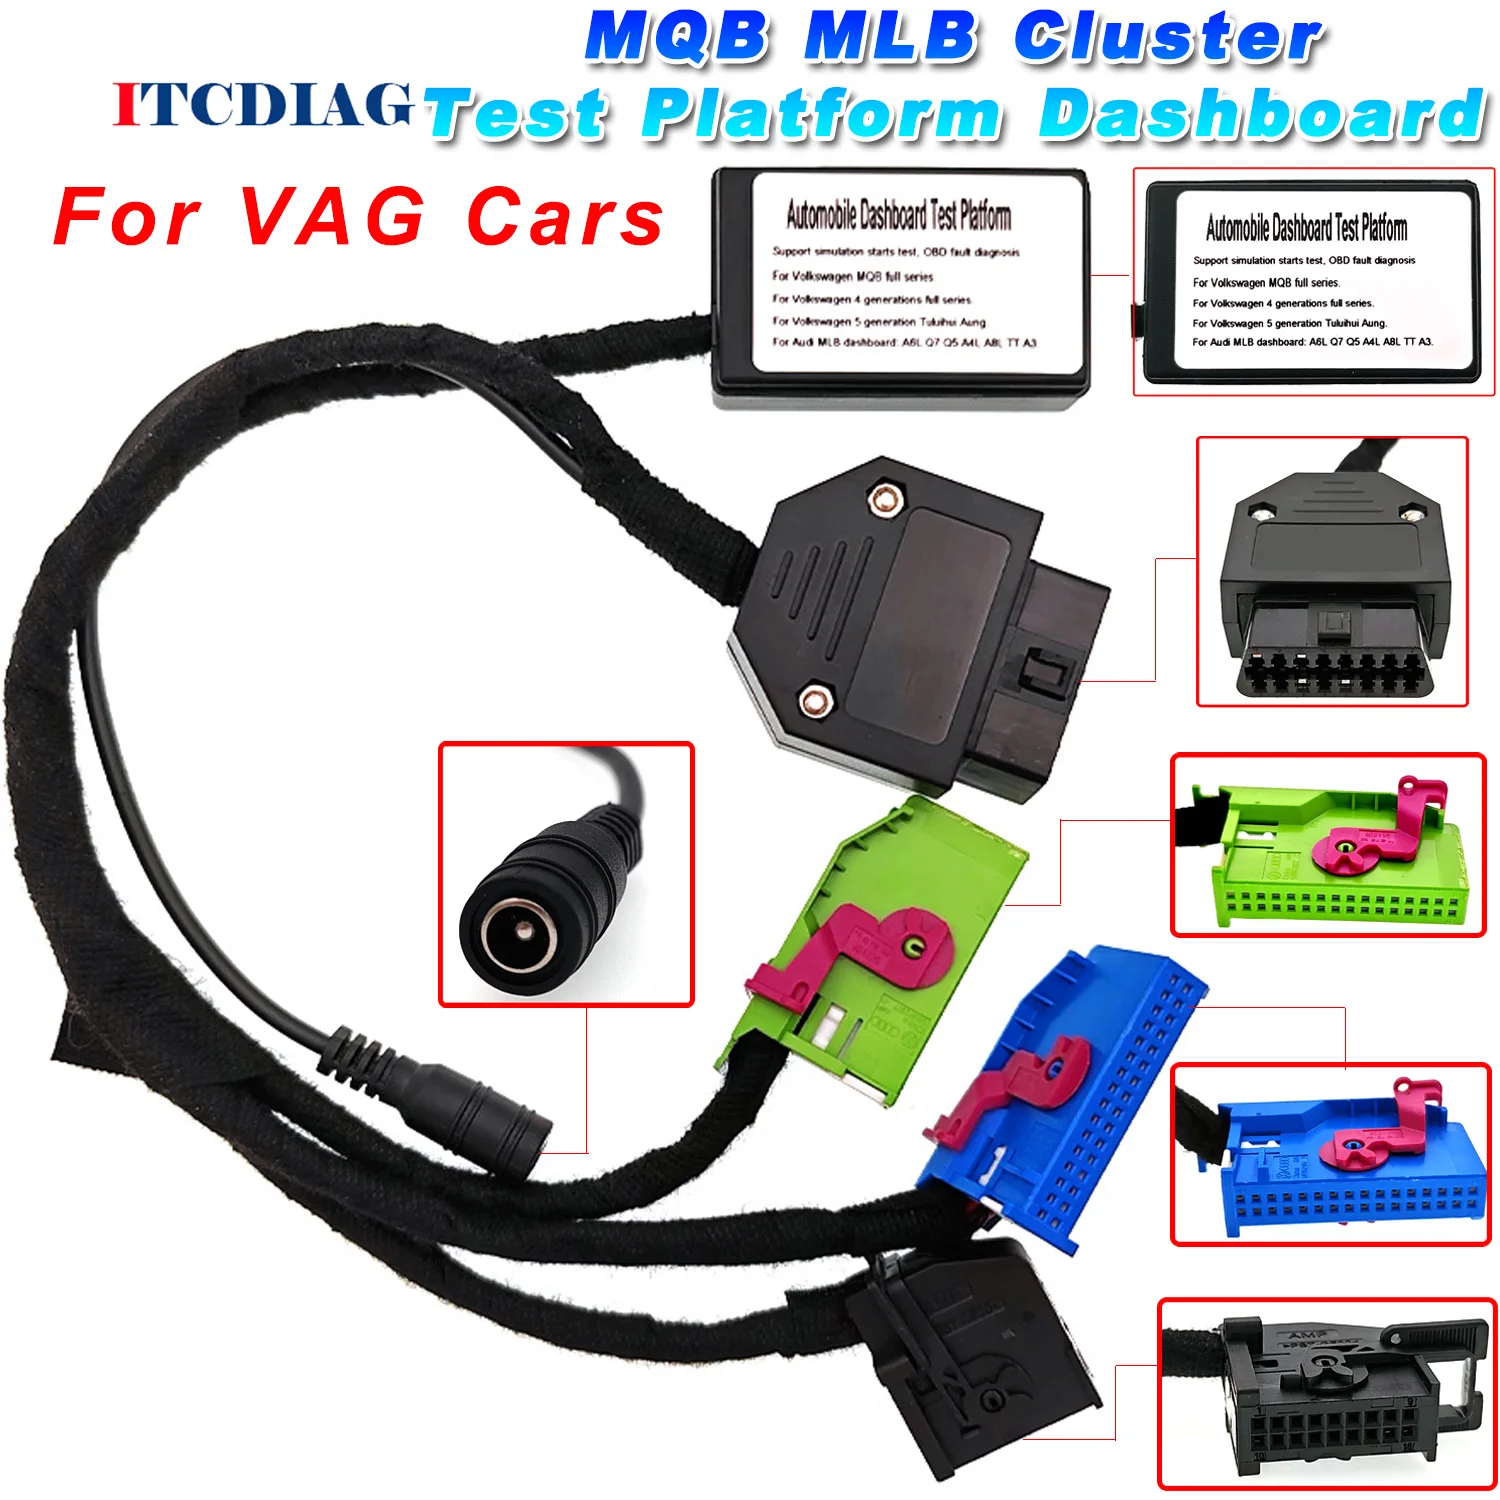 

Car MQB MLB Cluster Test Platform Dashboard Cable Kit for VW MQB full series for Audi A6 A8 A4 Q5 Q7 MLB Car Power On Instrument